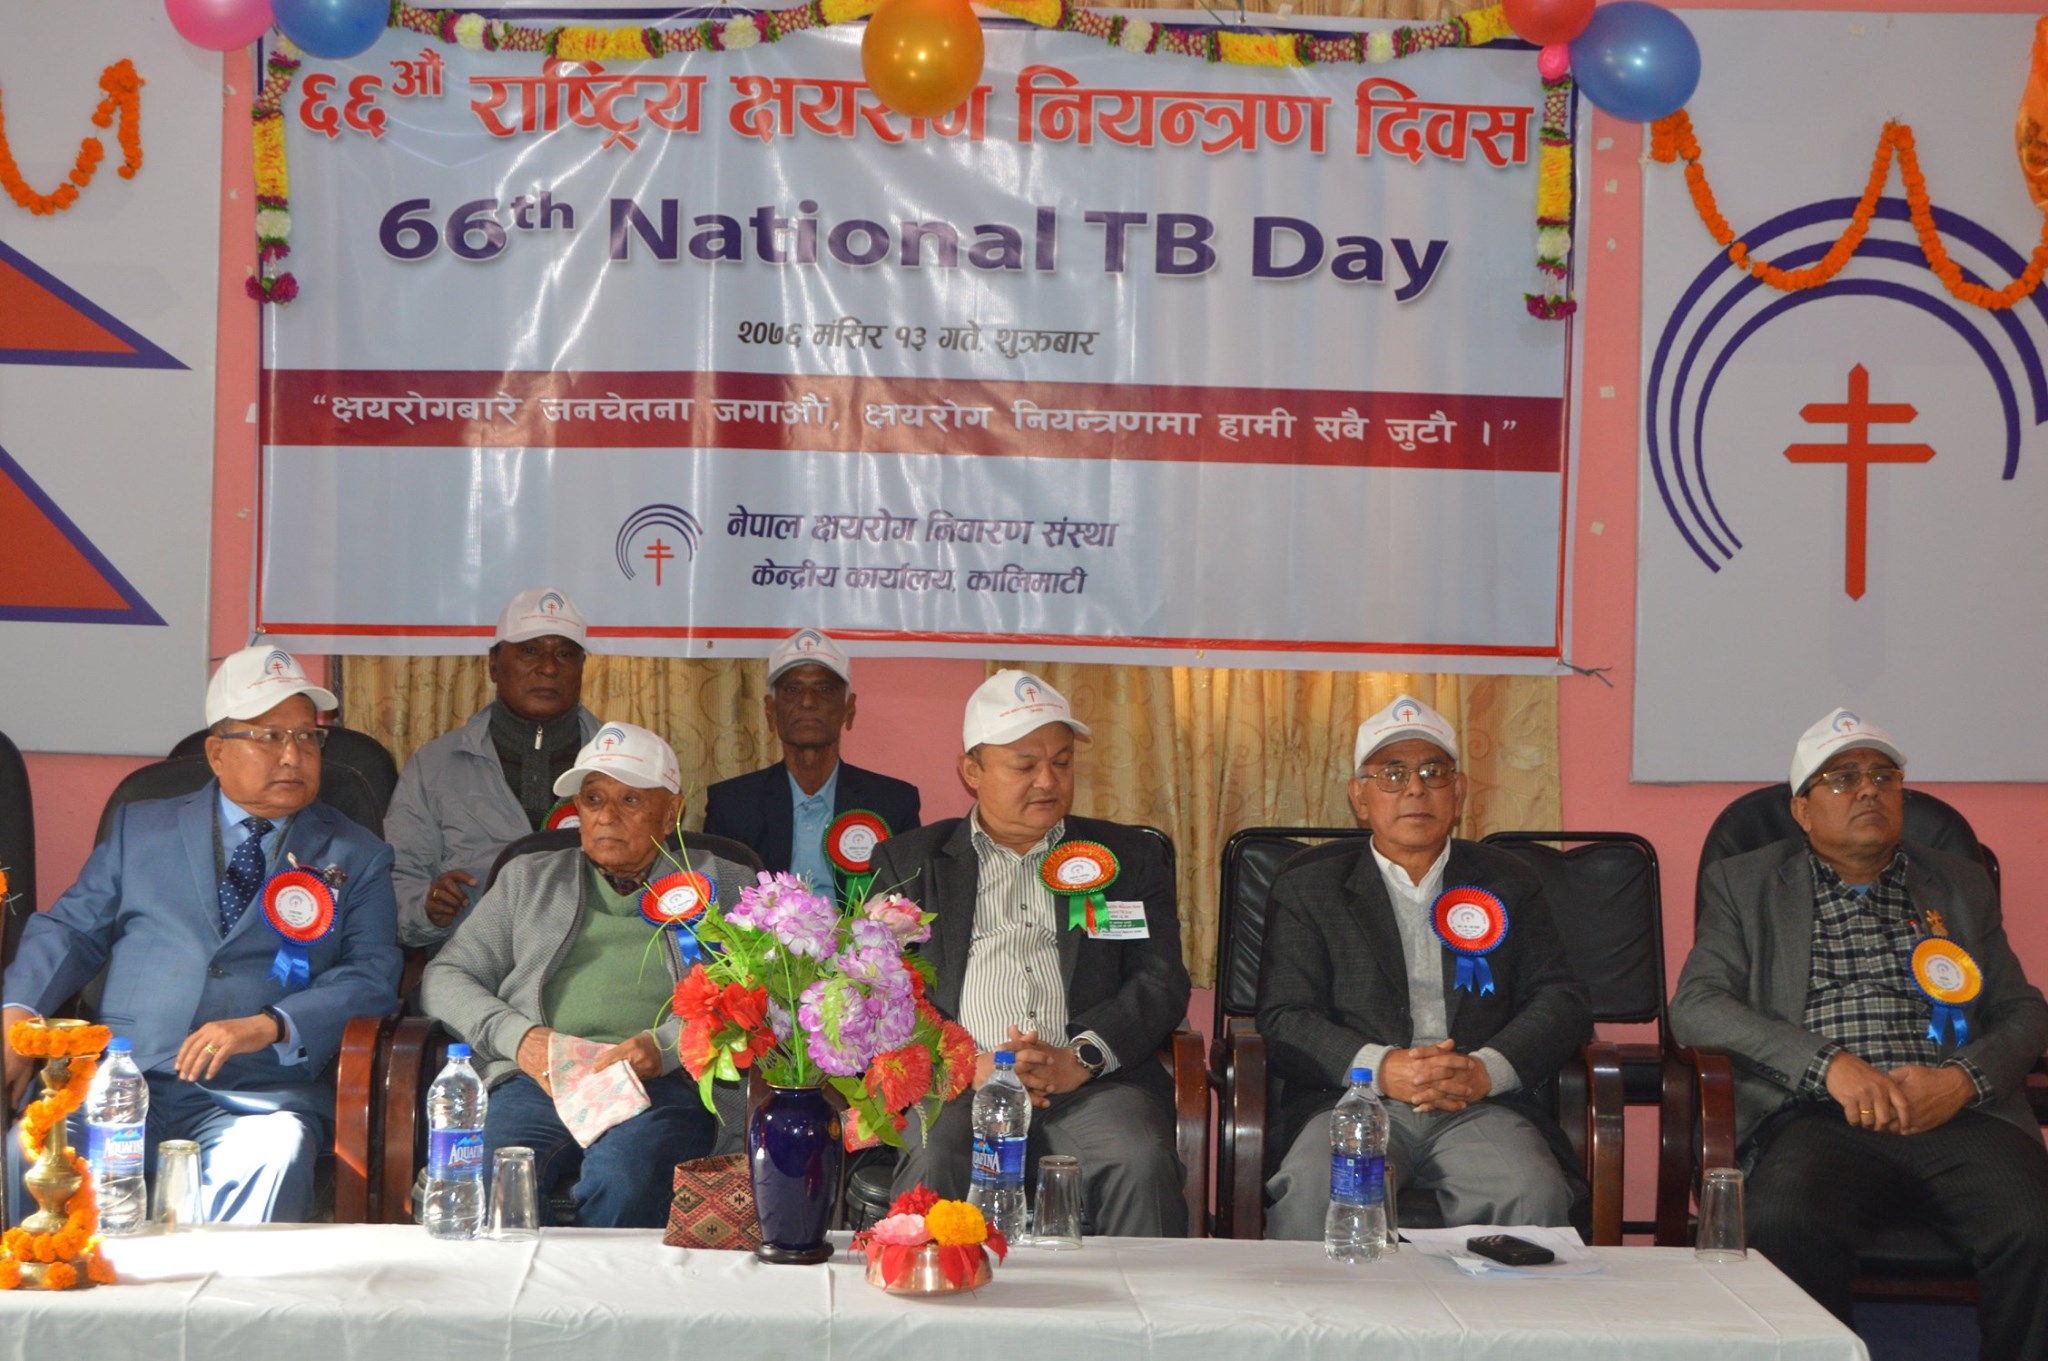 66th National TB day celebration